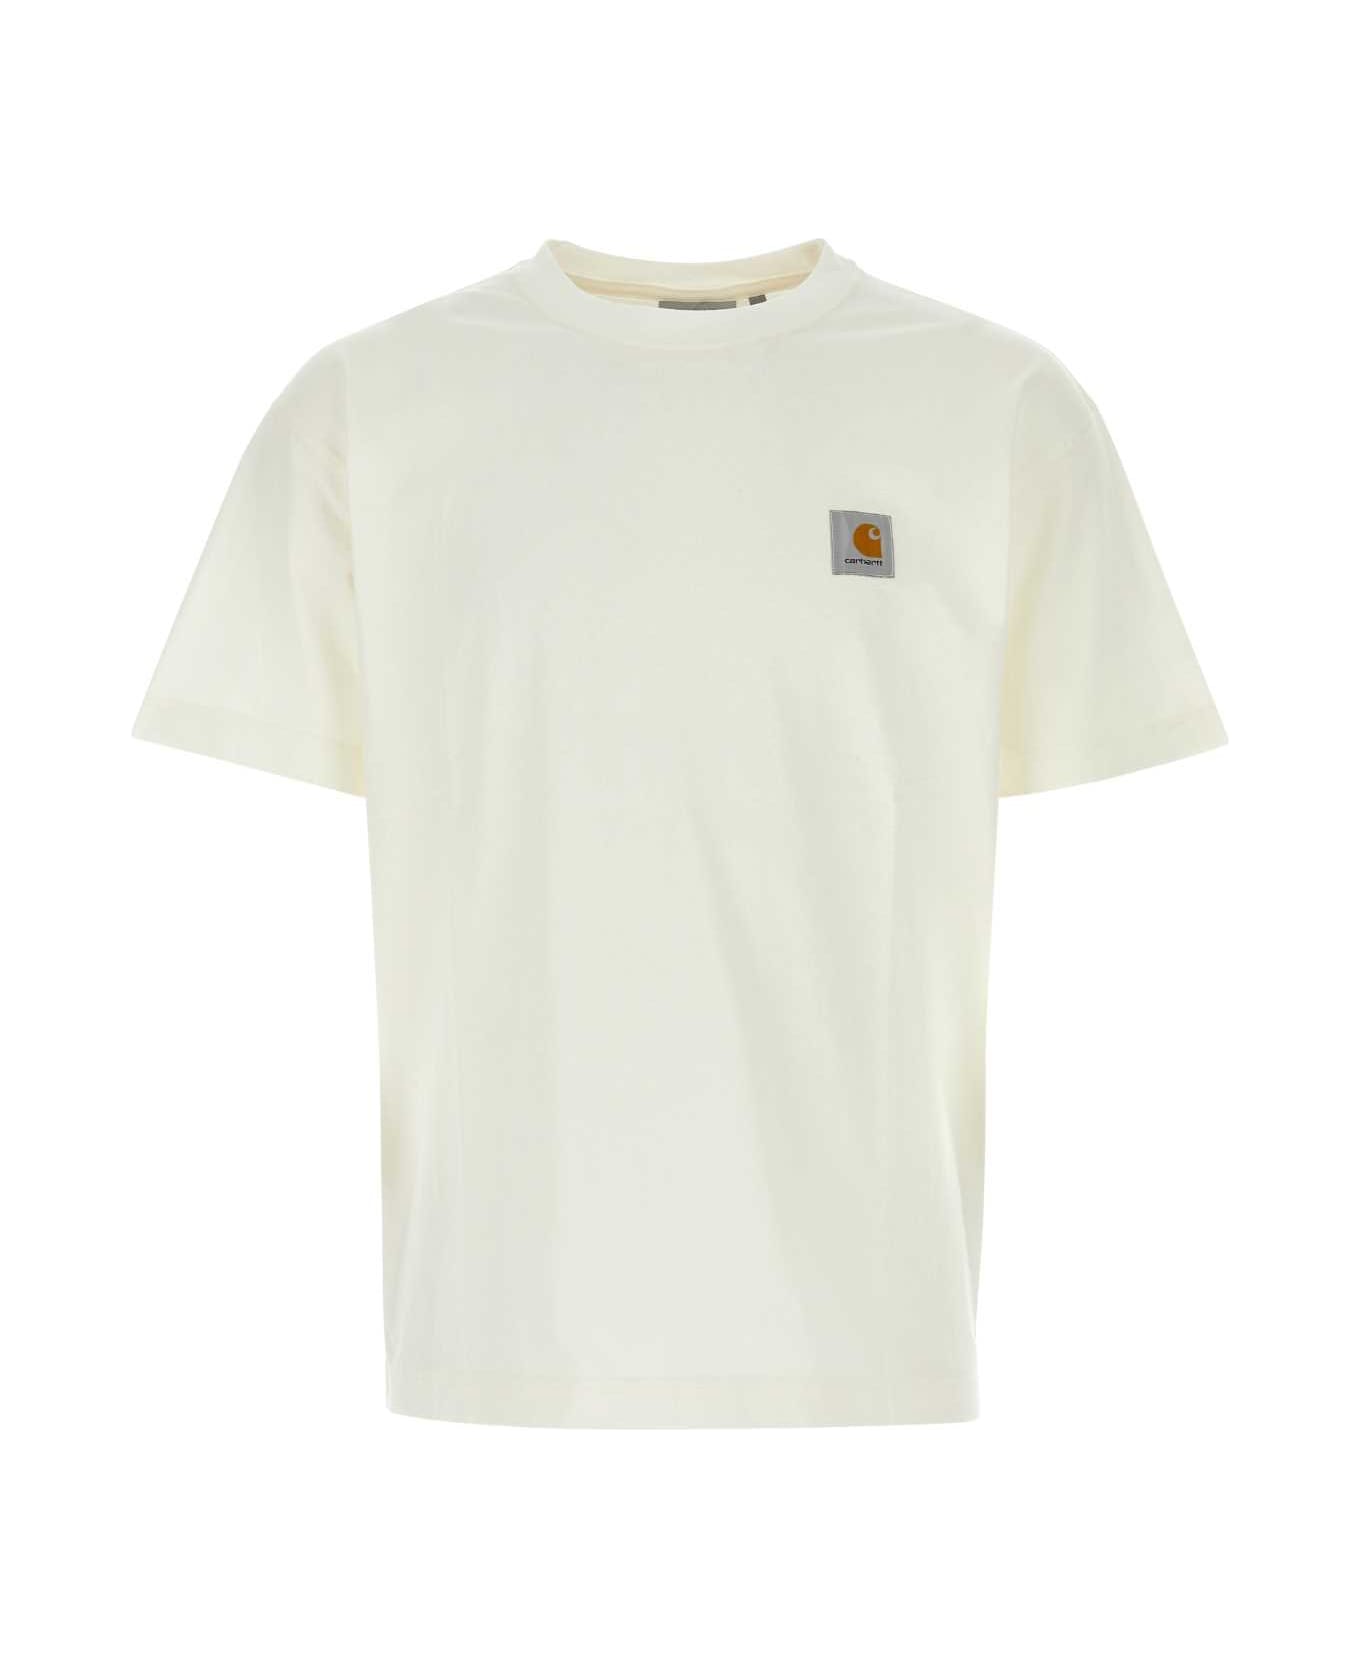 Carhartt White Cotton Oversize S/s Nelson T-shirt - WAX